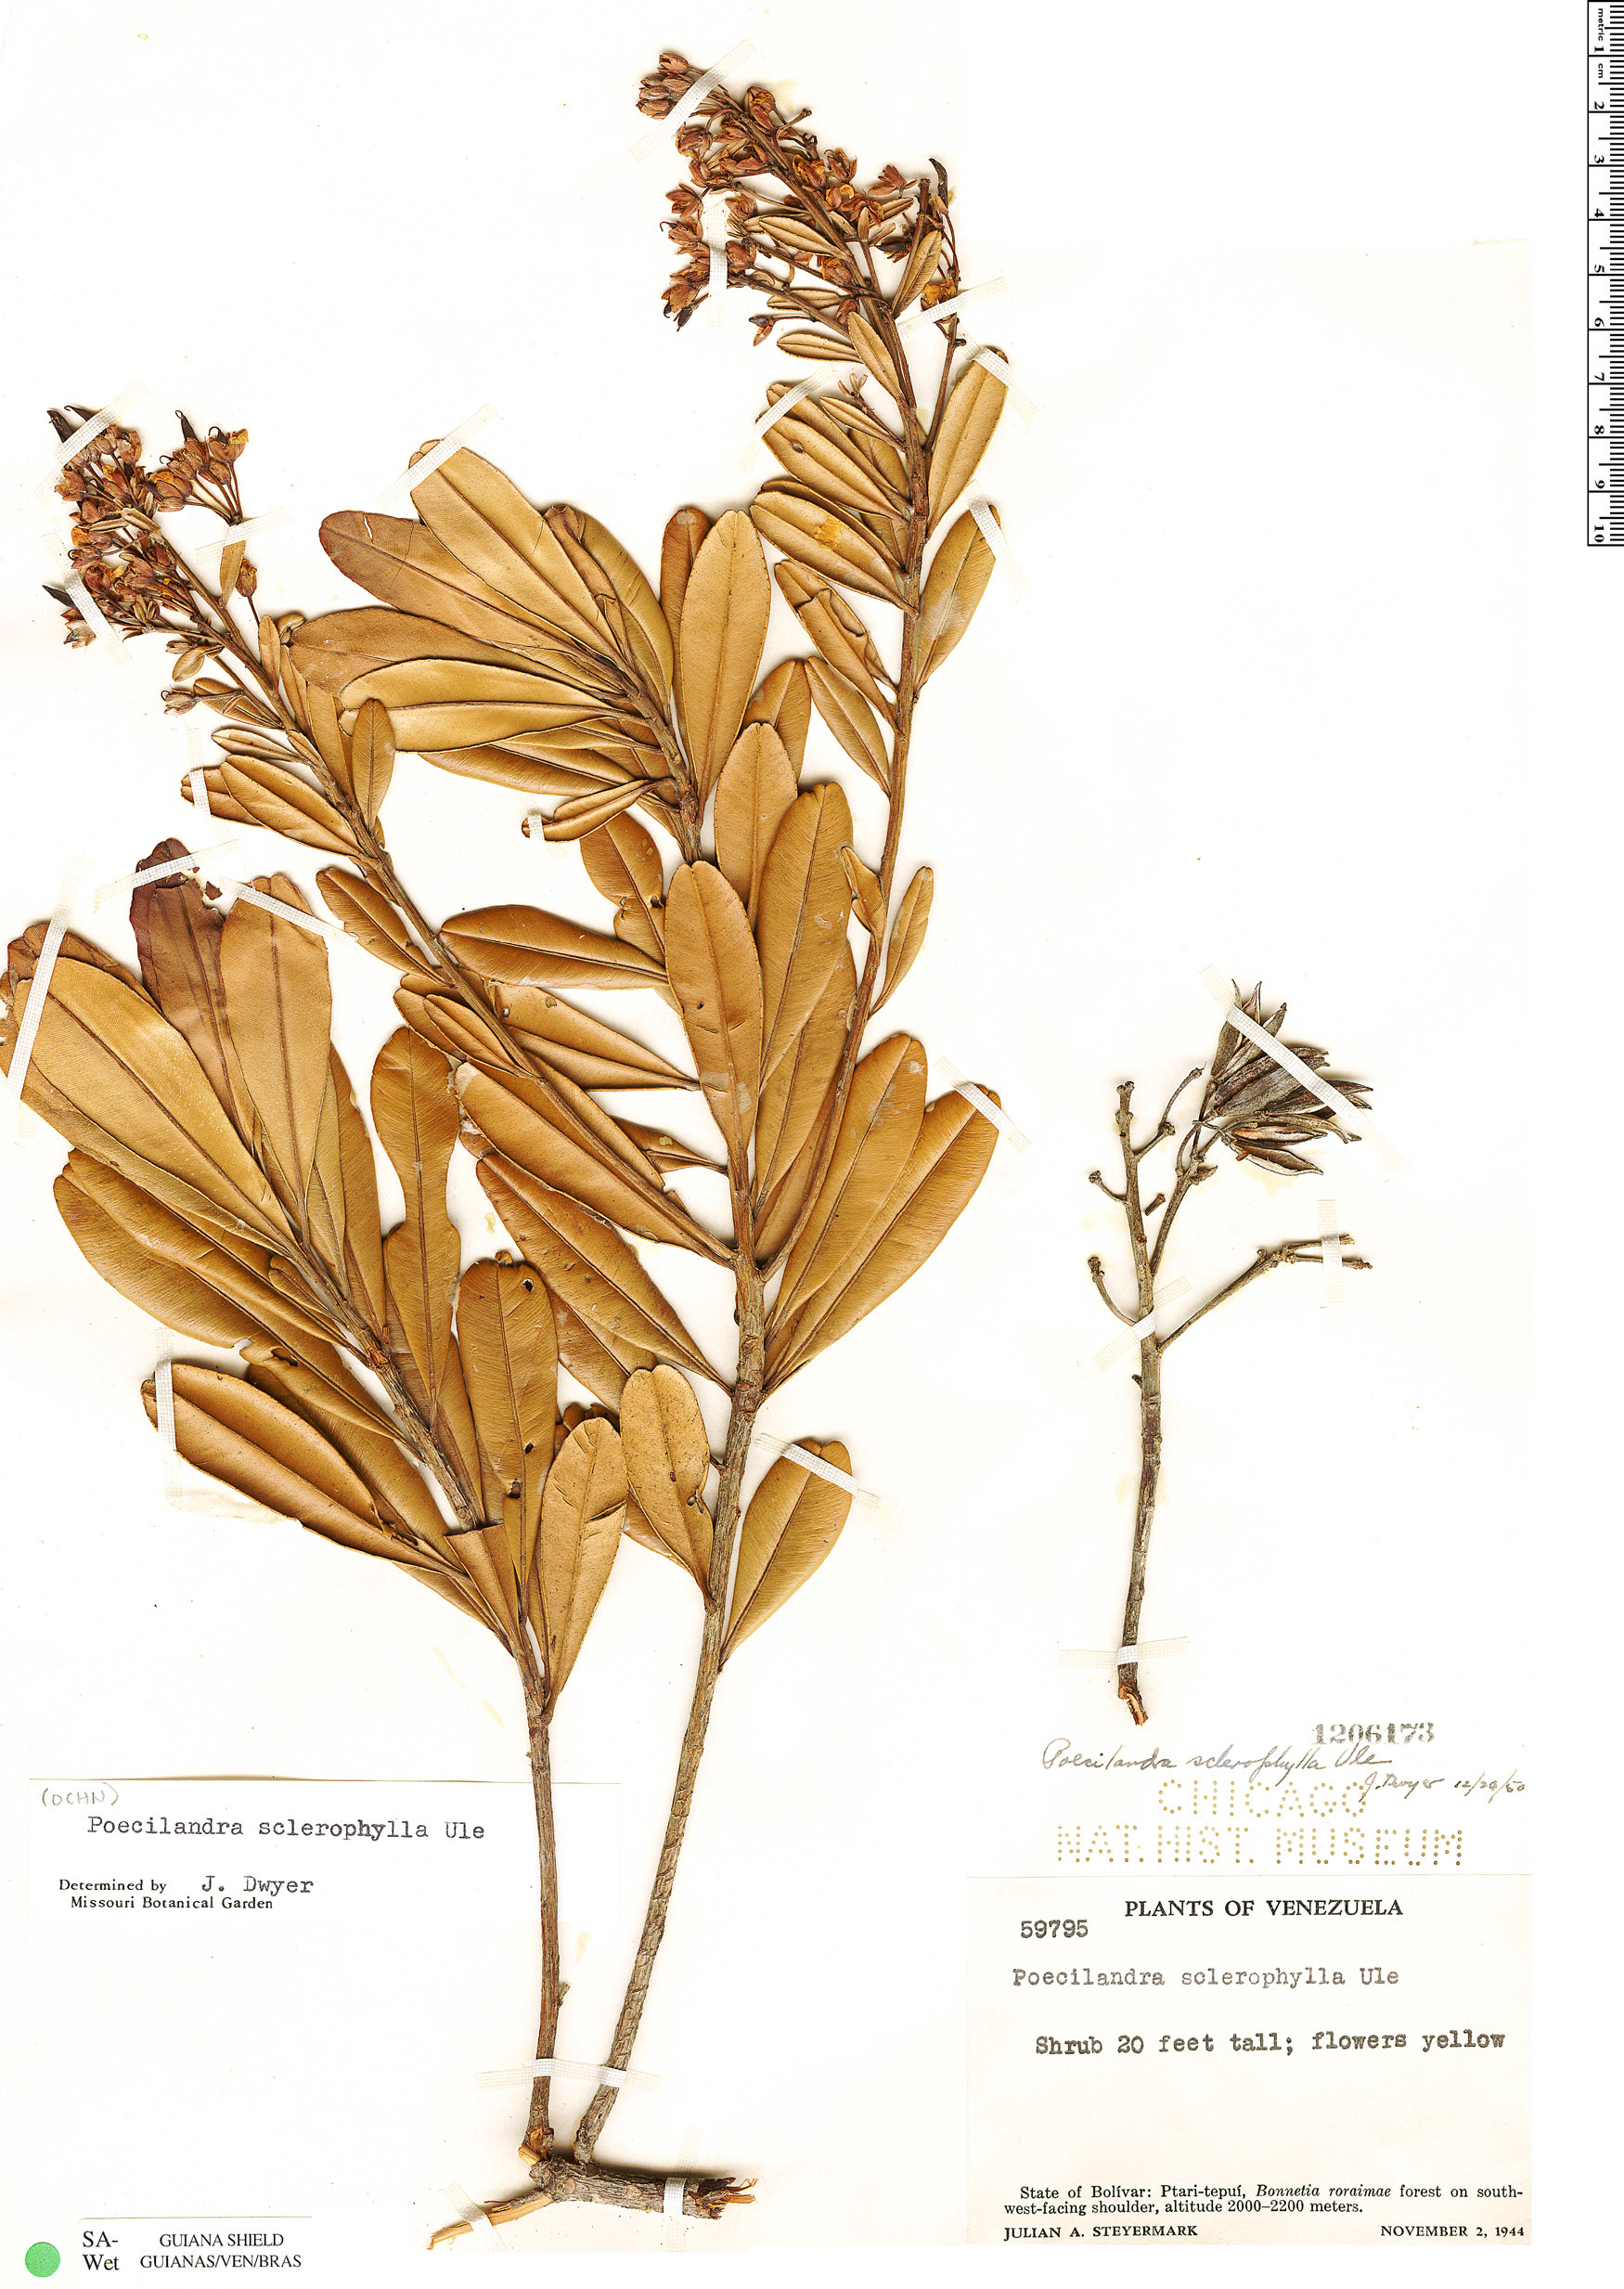 Poecilandra retusa var. sclerophylla image